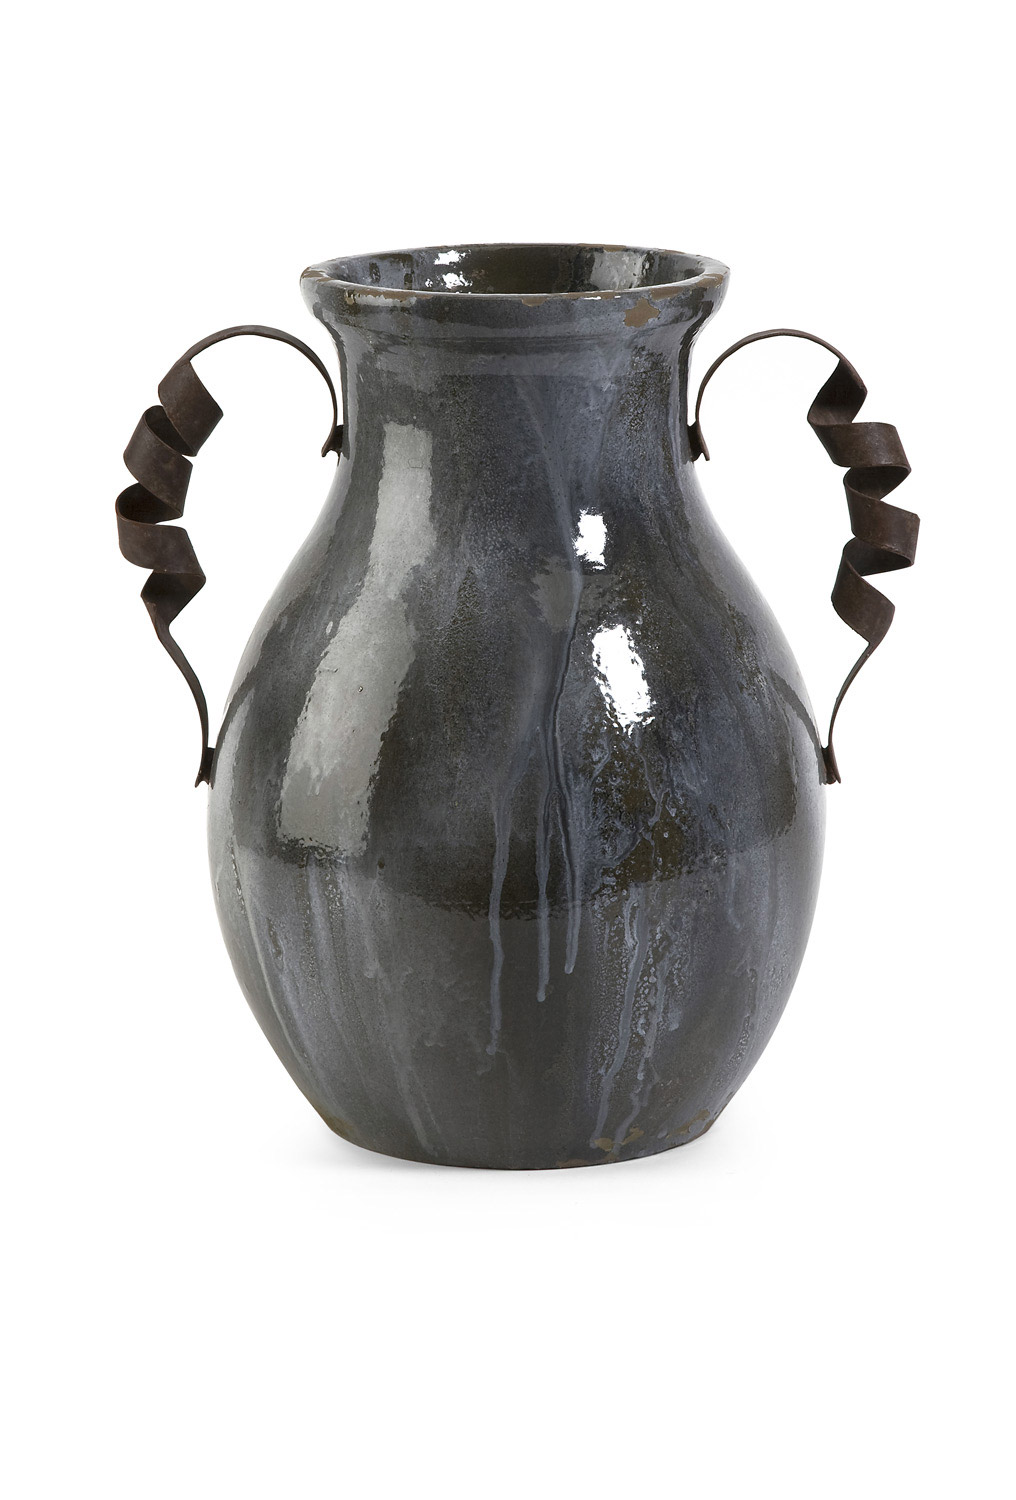 IMAX Bettina Short Vase with Iron Handle